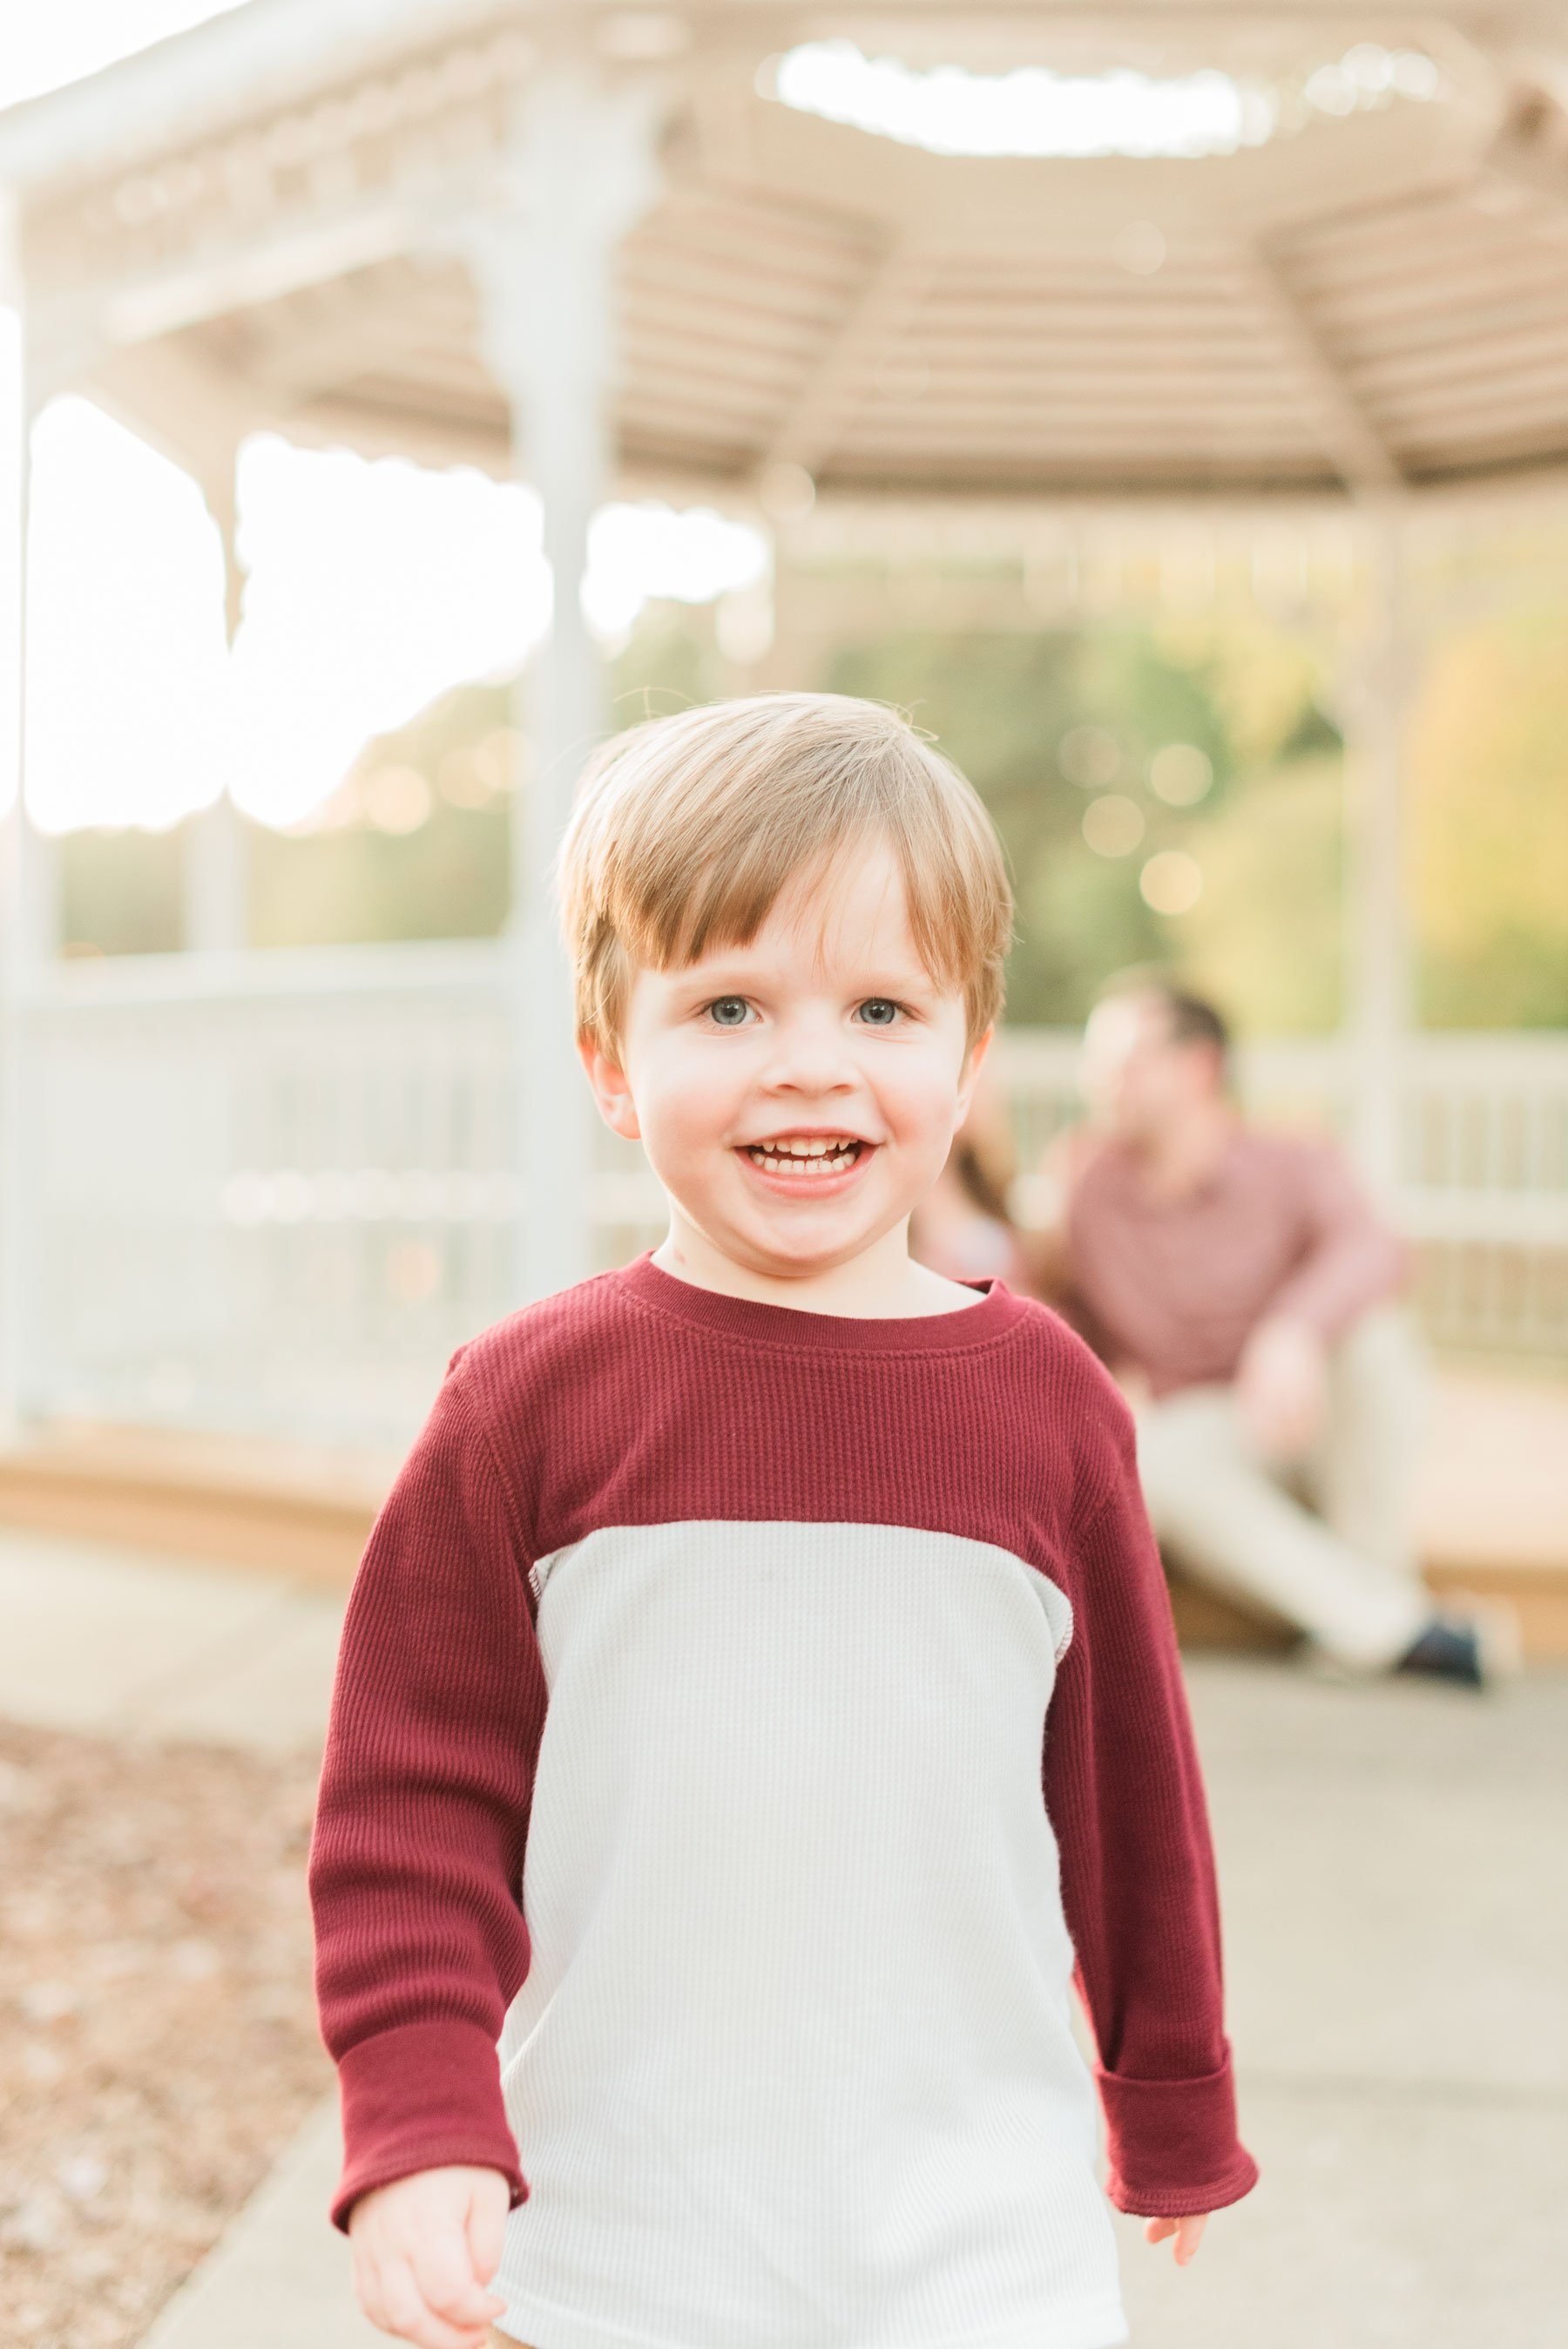  A strawberry-blonde two-year-old boy wearing a red and white shirt smiles. Atlanta Georgia Sandy Springs Sharpsburg Roswell&nbsp; #familymaterintyphotos #pregnacyphotoshoot #littleboyphoto&nbsp; #peachtreecity #atlantafamilyphotographer #jacquieeric